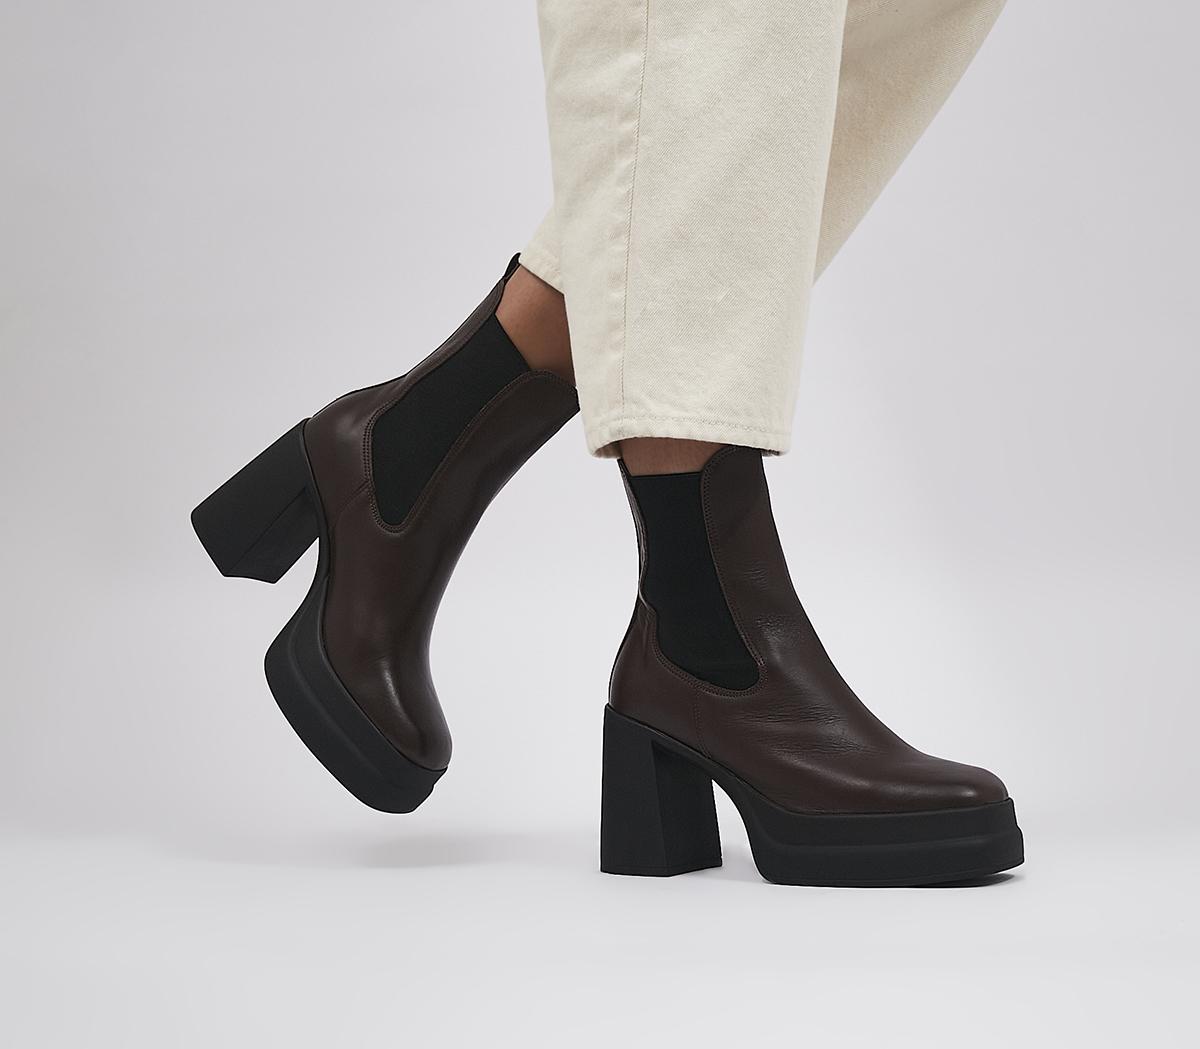 OFFICEArke Platform Block Heel Ankle BootsBrown Leather